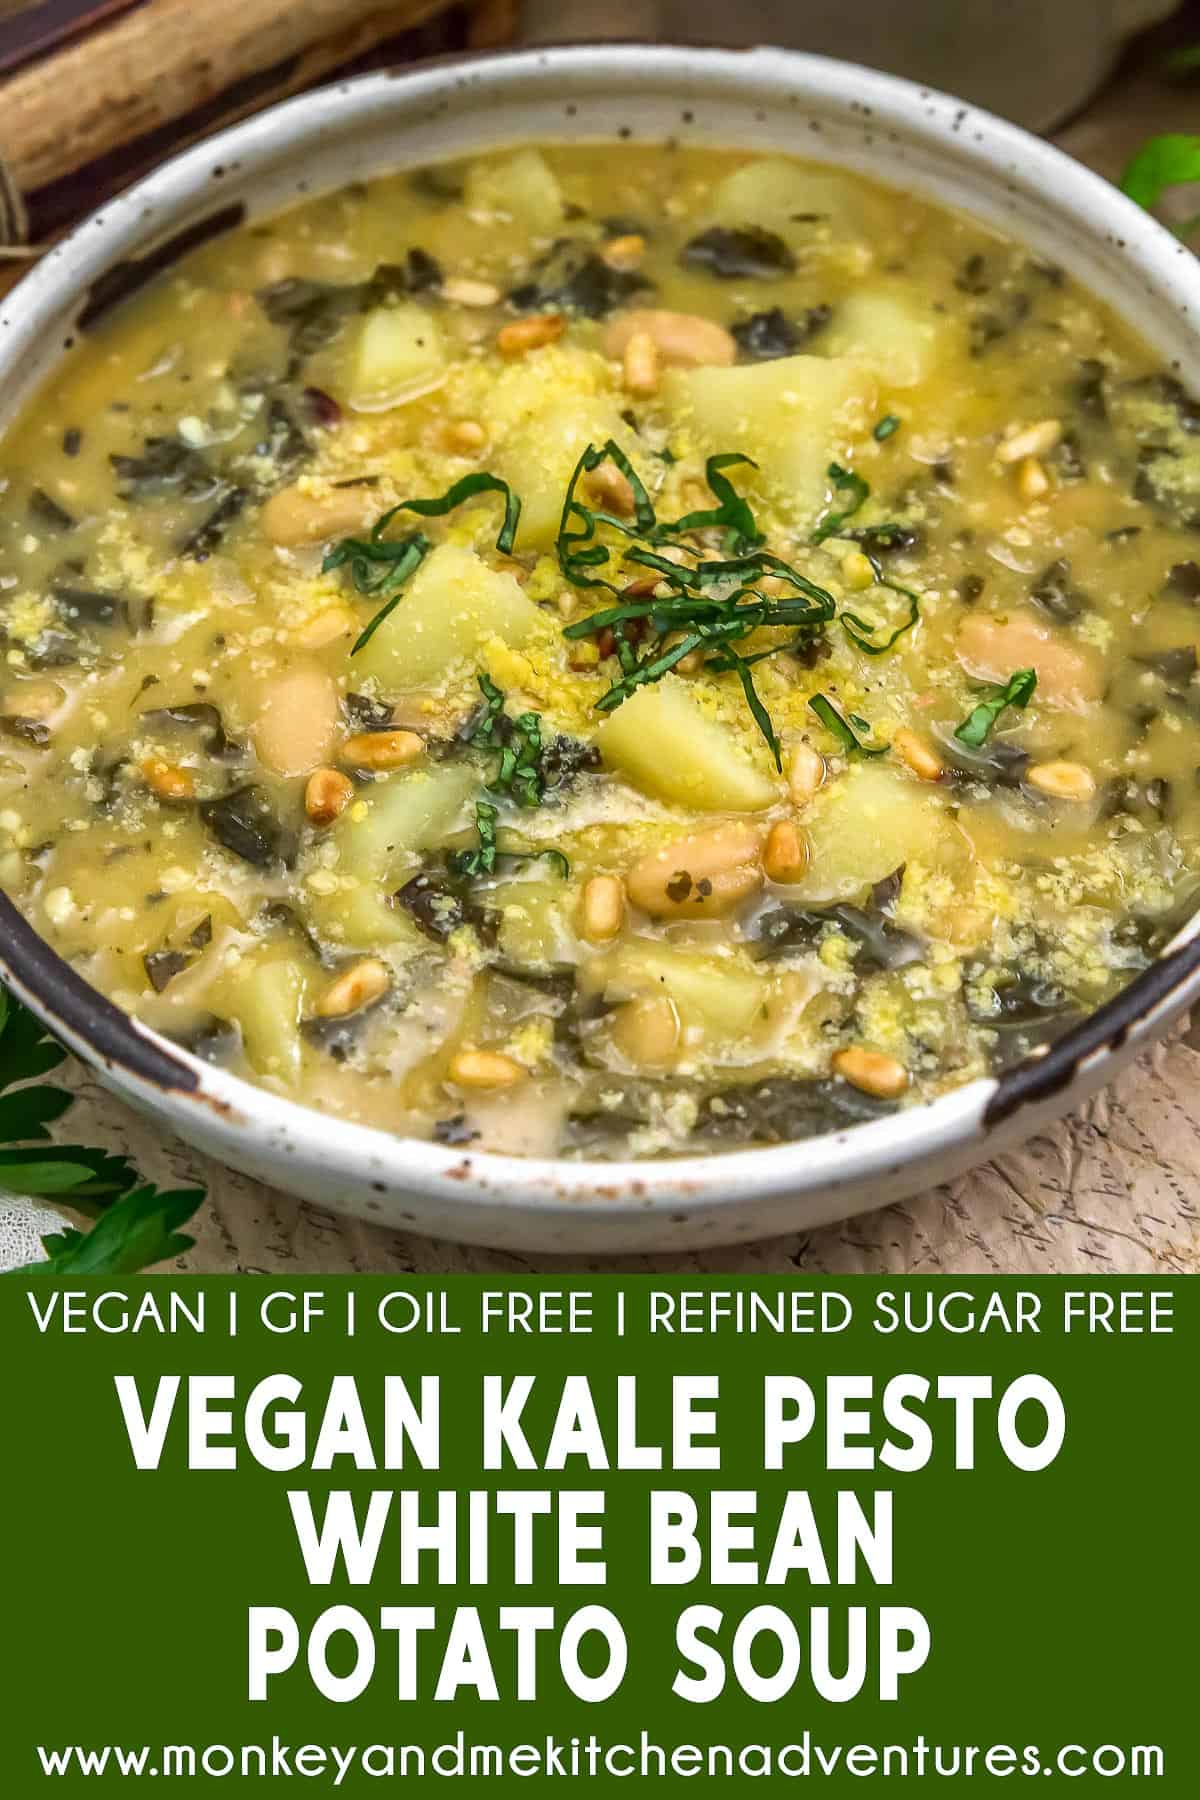 Vegan Kale Pesto White Bean Potato Soup with text description